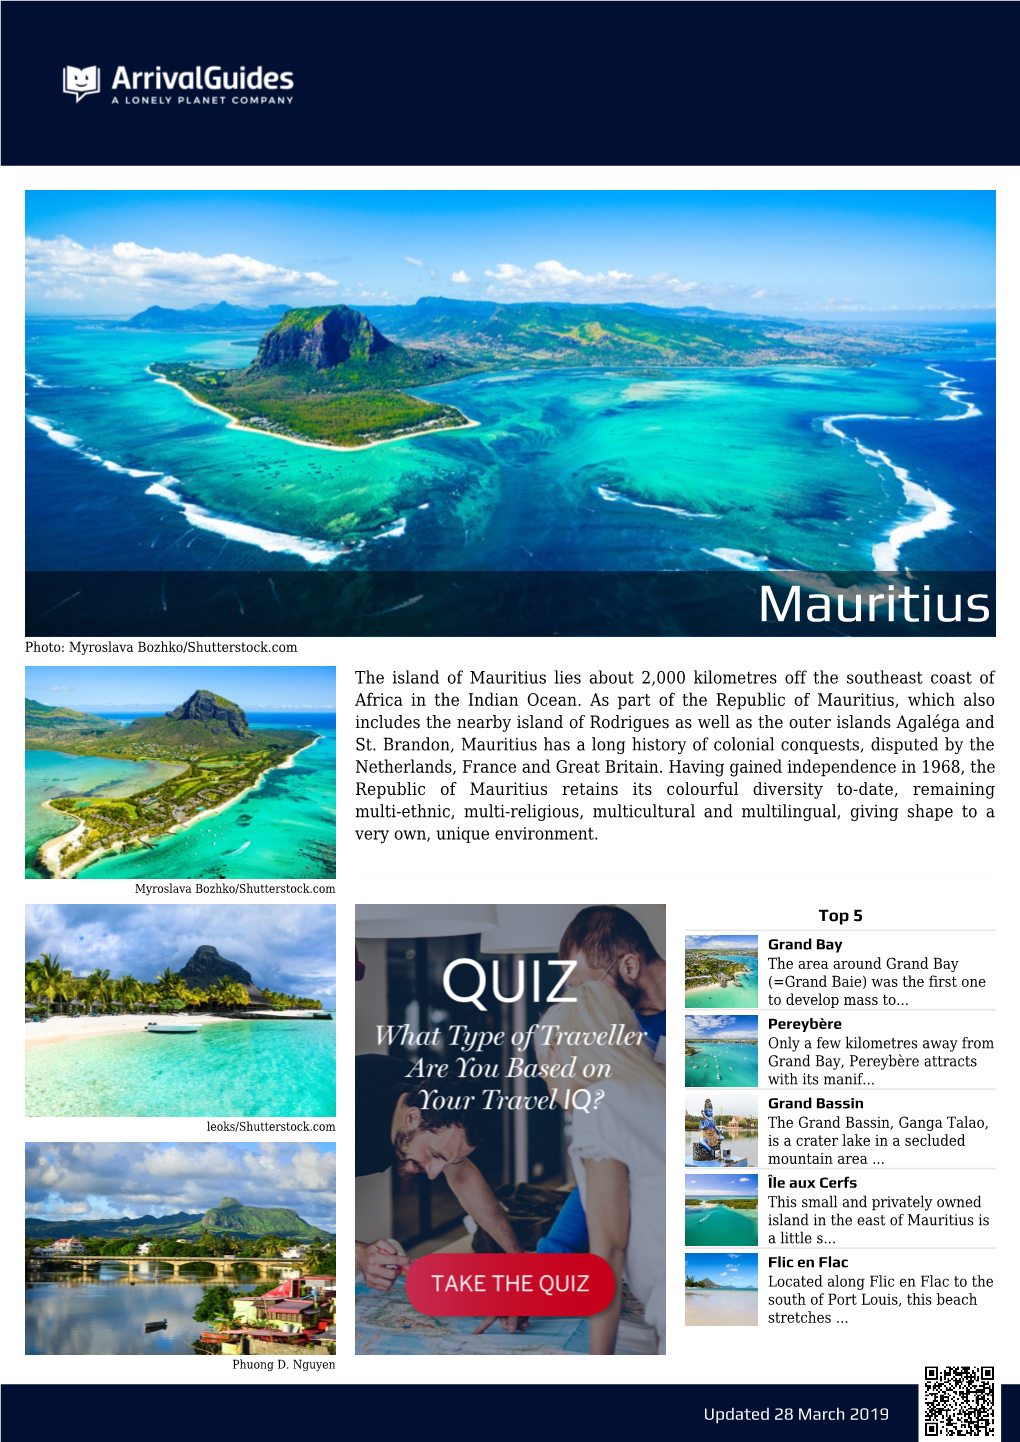 Mauritius Photo: Myroslava Bozhko/Shutterstock.Com the Island of Mauritius Lies About 2,000 Kilometres Off the Southeast Coast of Africa in the Indian Ocean